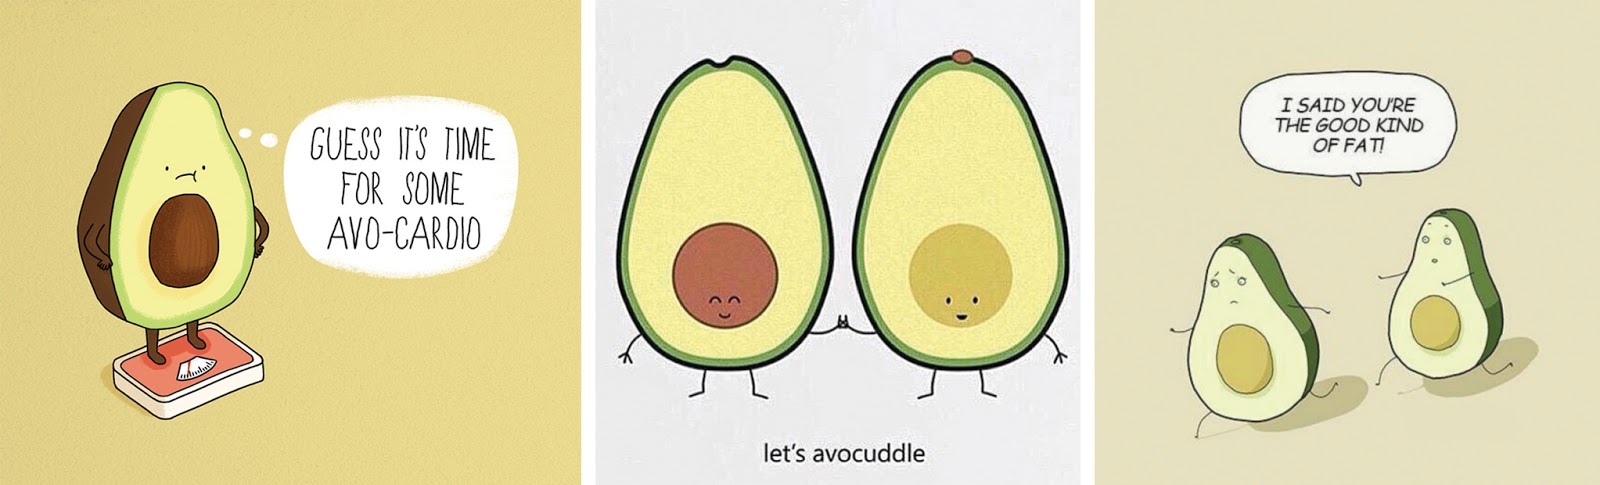 Some Avocado Facts. 